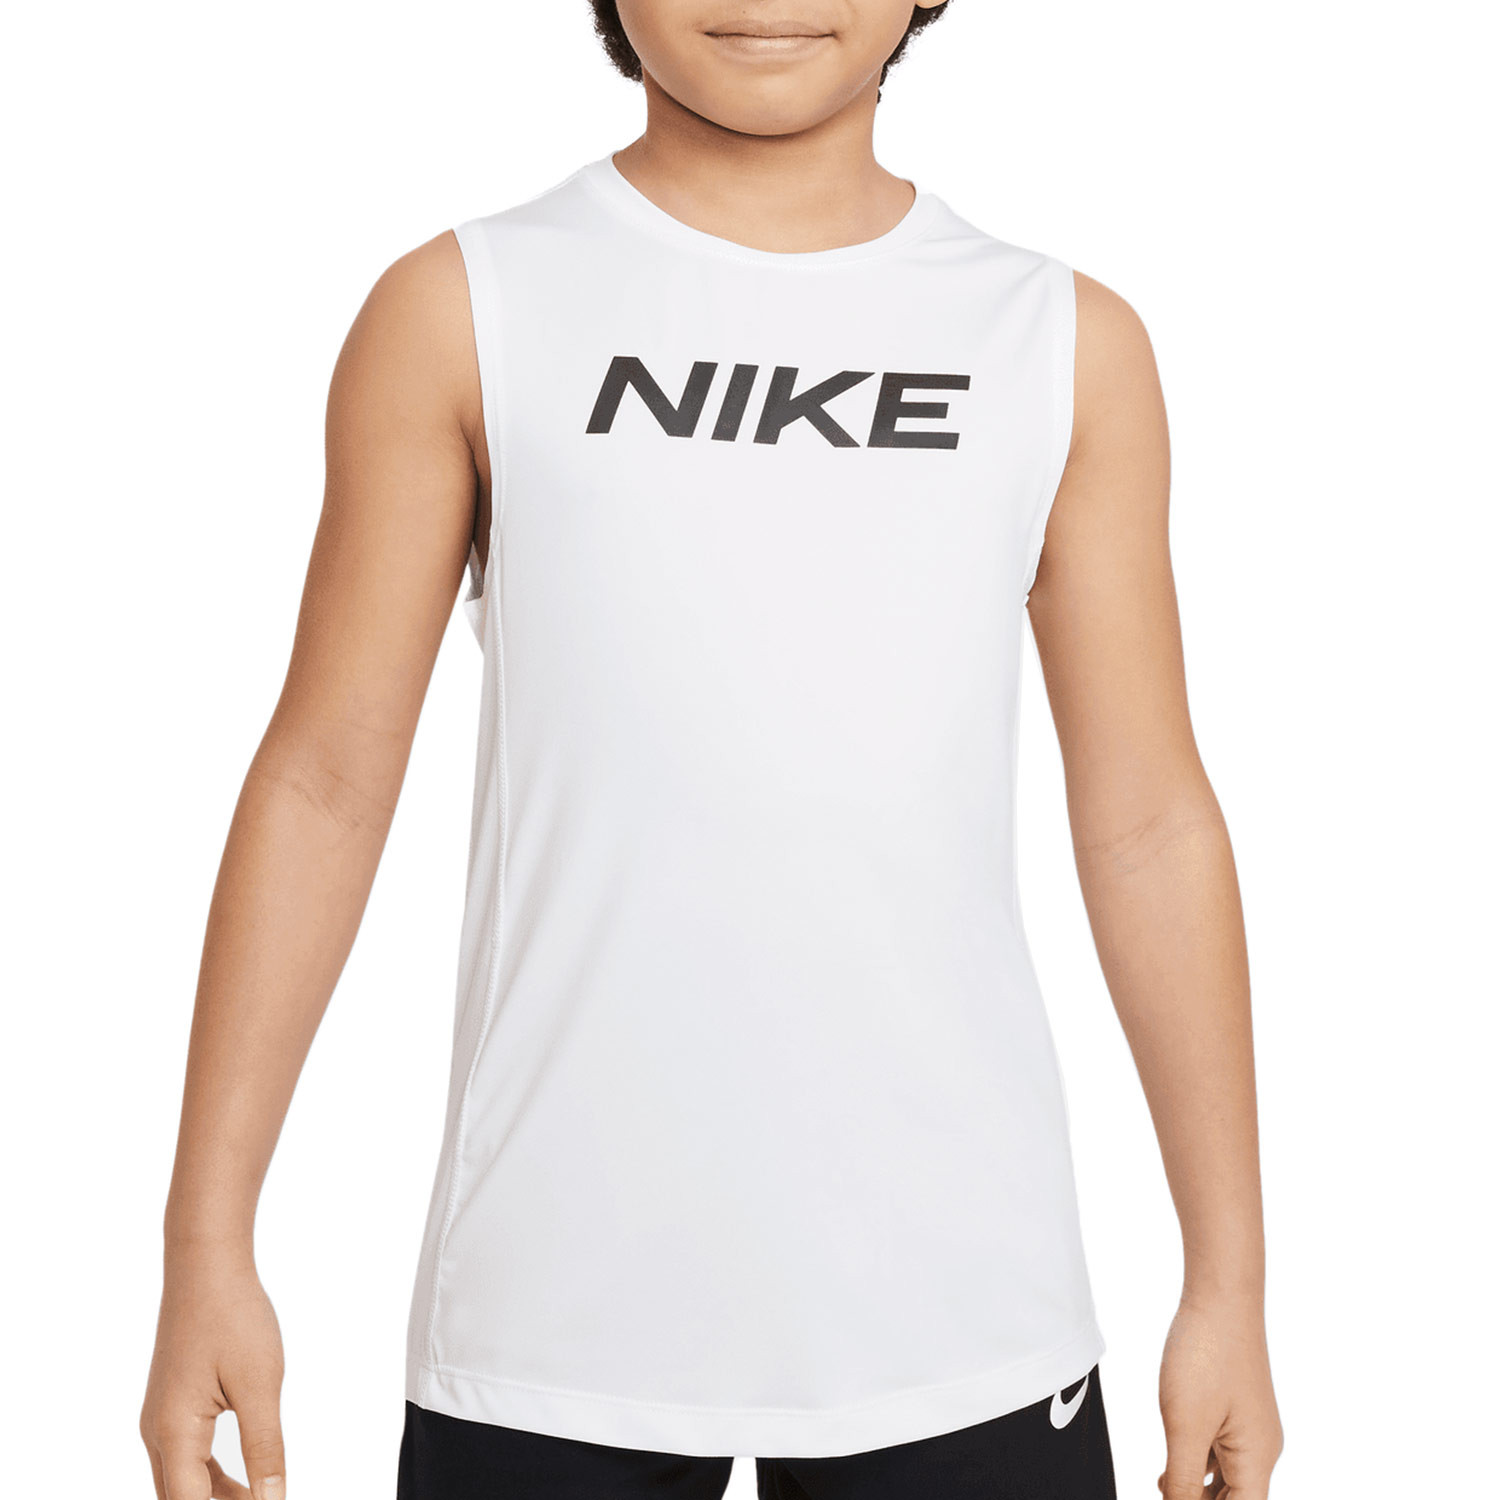 Camiseta niño tirantes Nike Dri-Fit blanca futbolmaniaKids